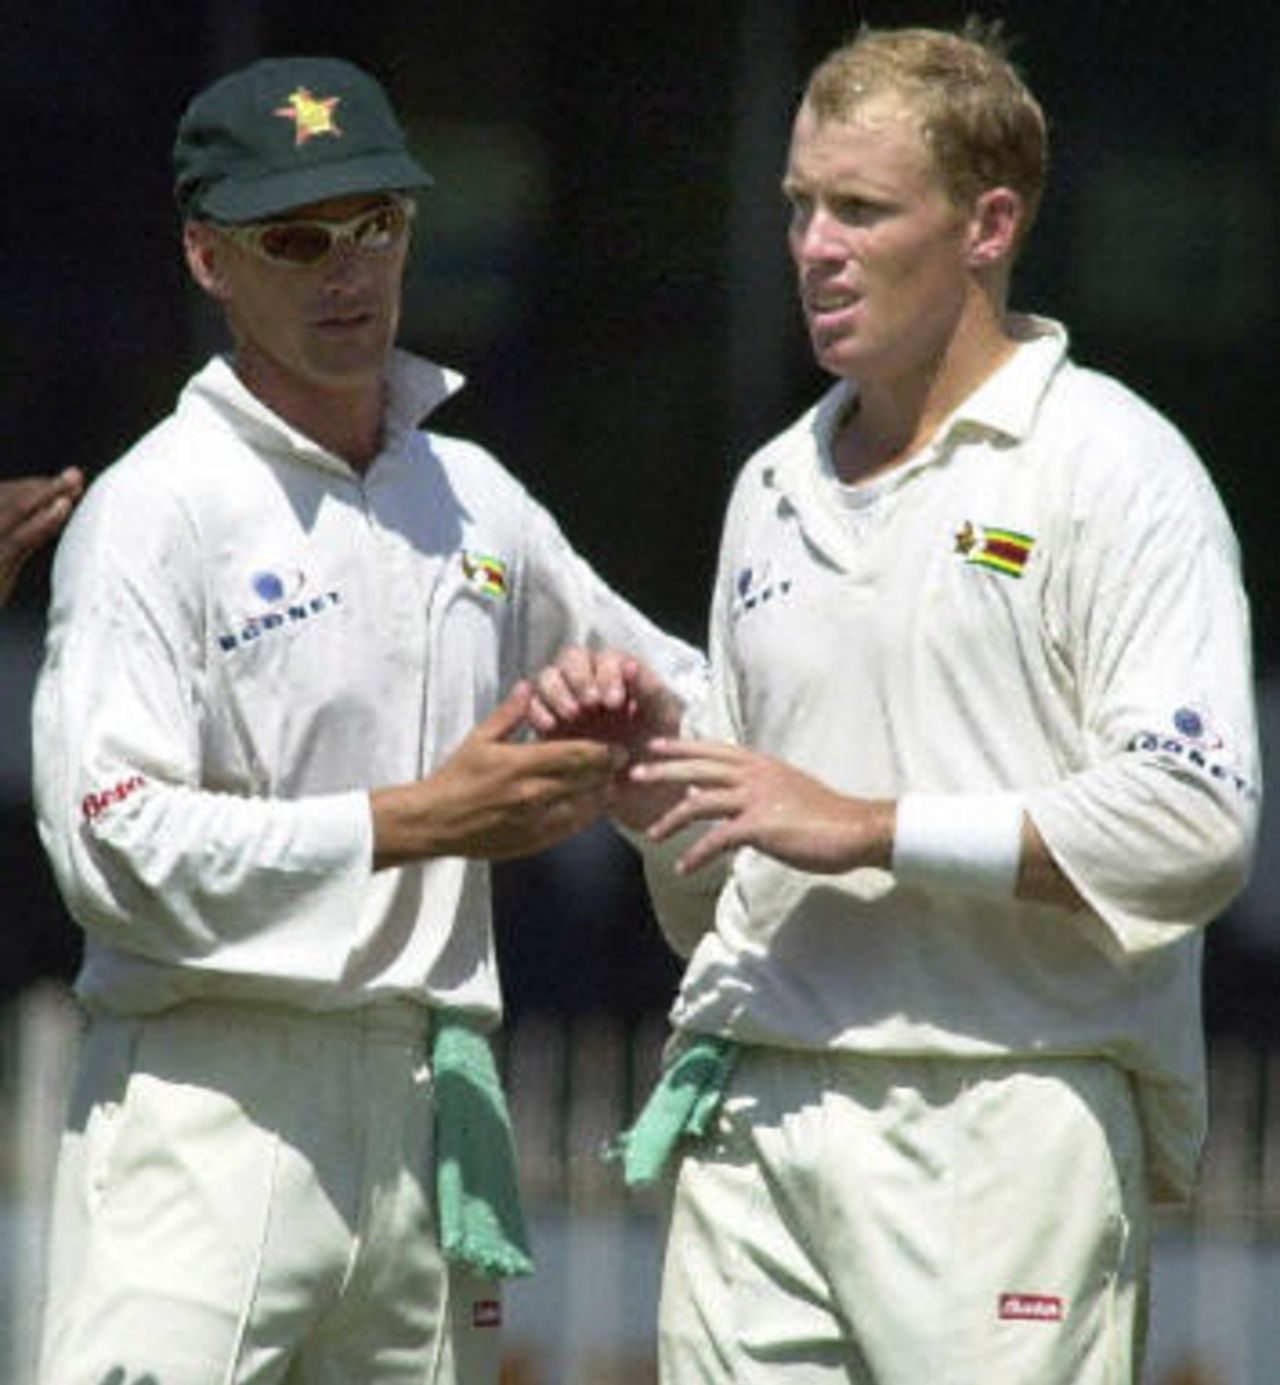 1st Test: Sri Lanka v Zimbabwe at Sinhalees Sports Club in Colombo,Janashakthi National Test Series Dec 2001-Jan 2002.